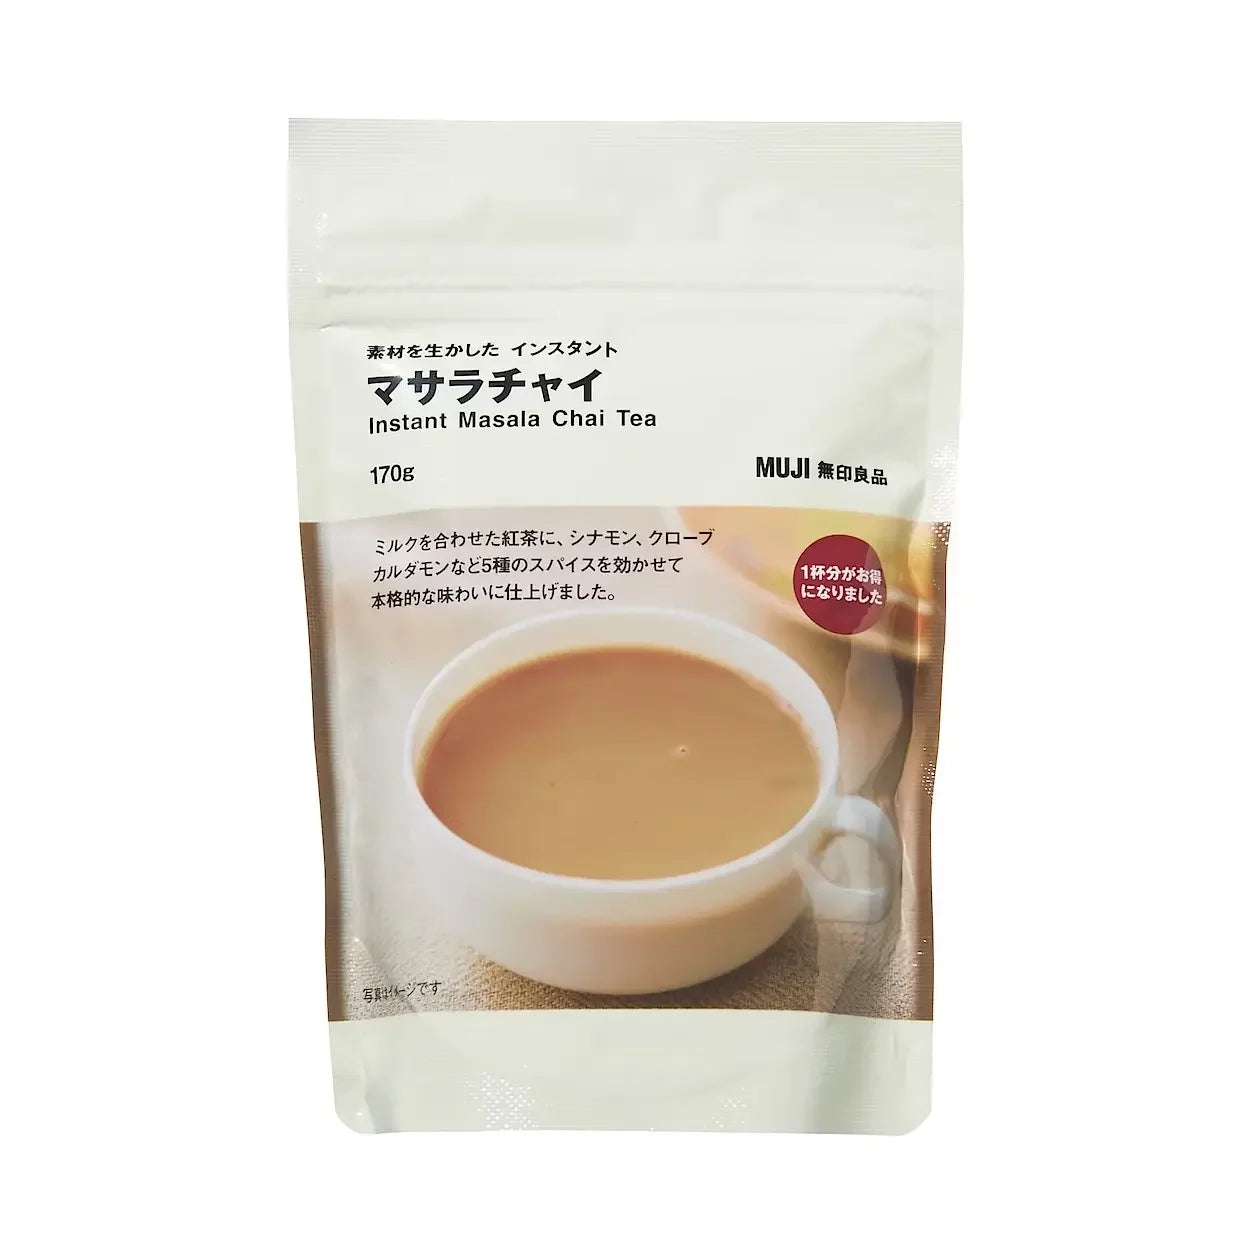 Muji-Masala-Chai-Spiced-Tea-Instant-Tea-Powder-170g-1-2024-05-20T01:09:52.562Z.webp